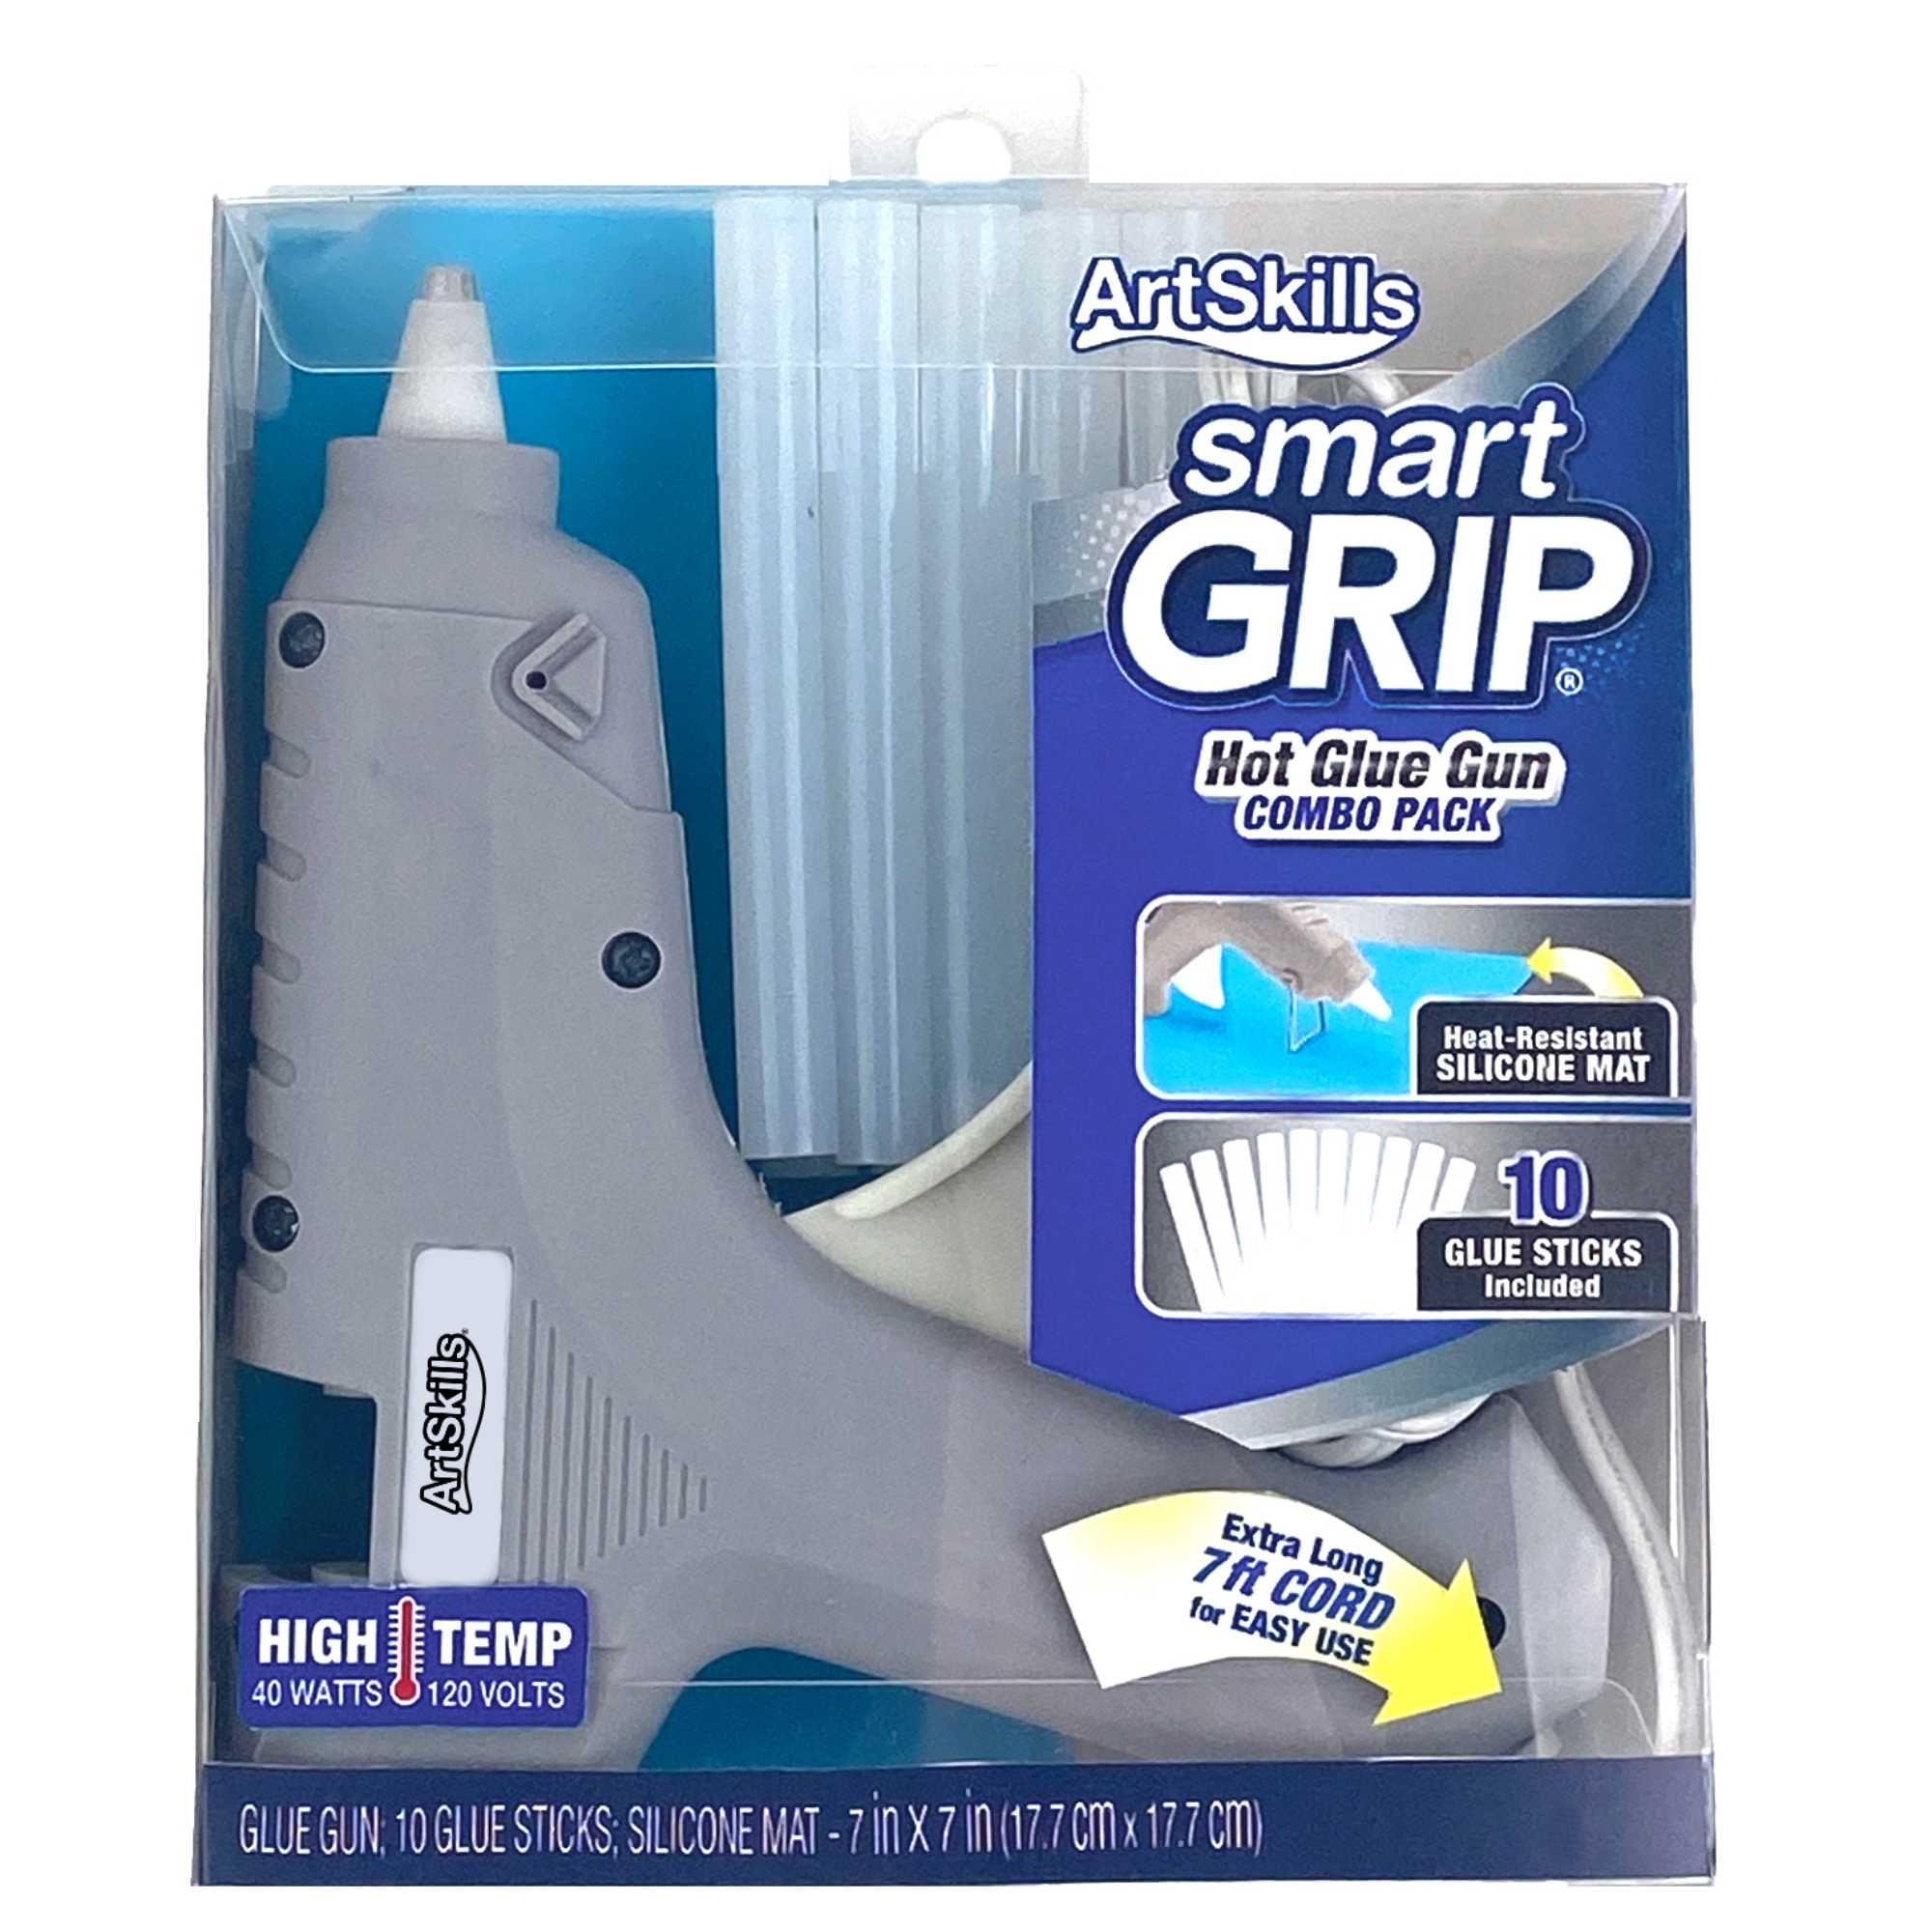 Paint Brush Grip Cover R3d-e-grip ready Grip Durable Brush Grip